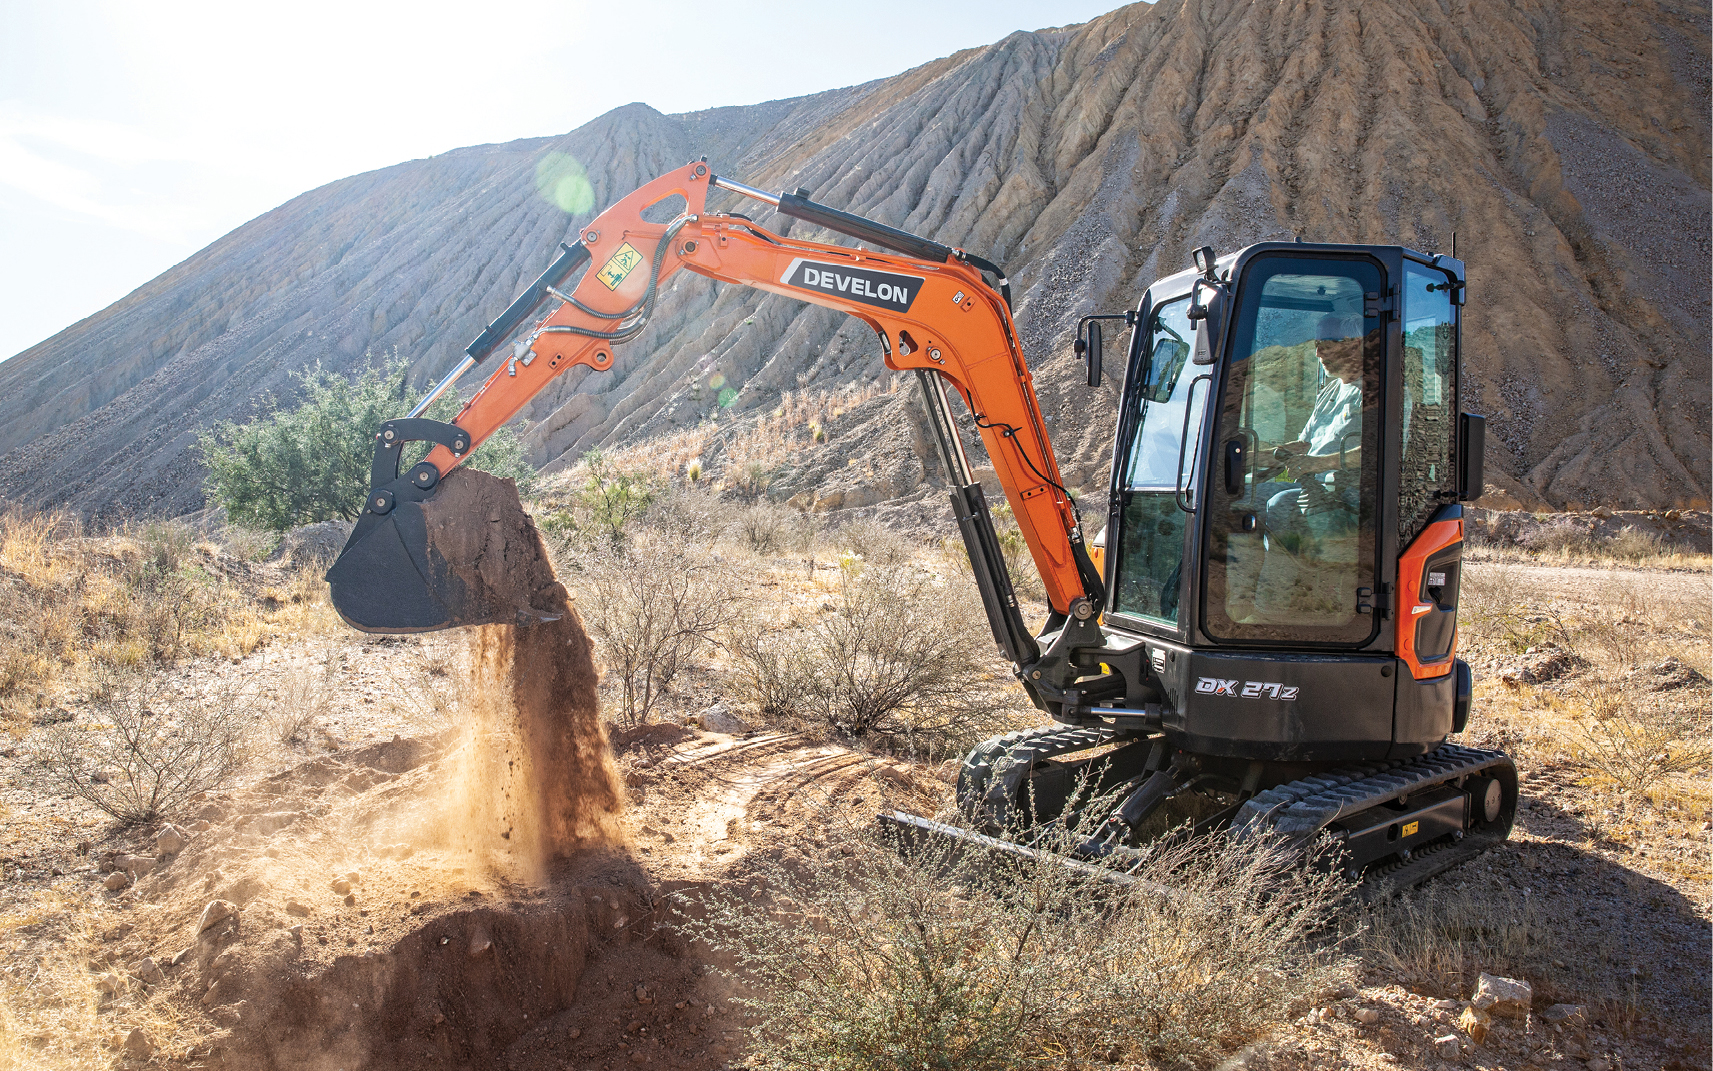 DEVELON mini excavator scoops dirt on a remote work site.